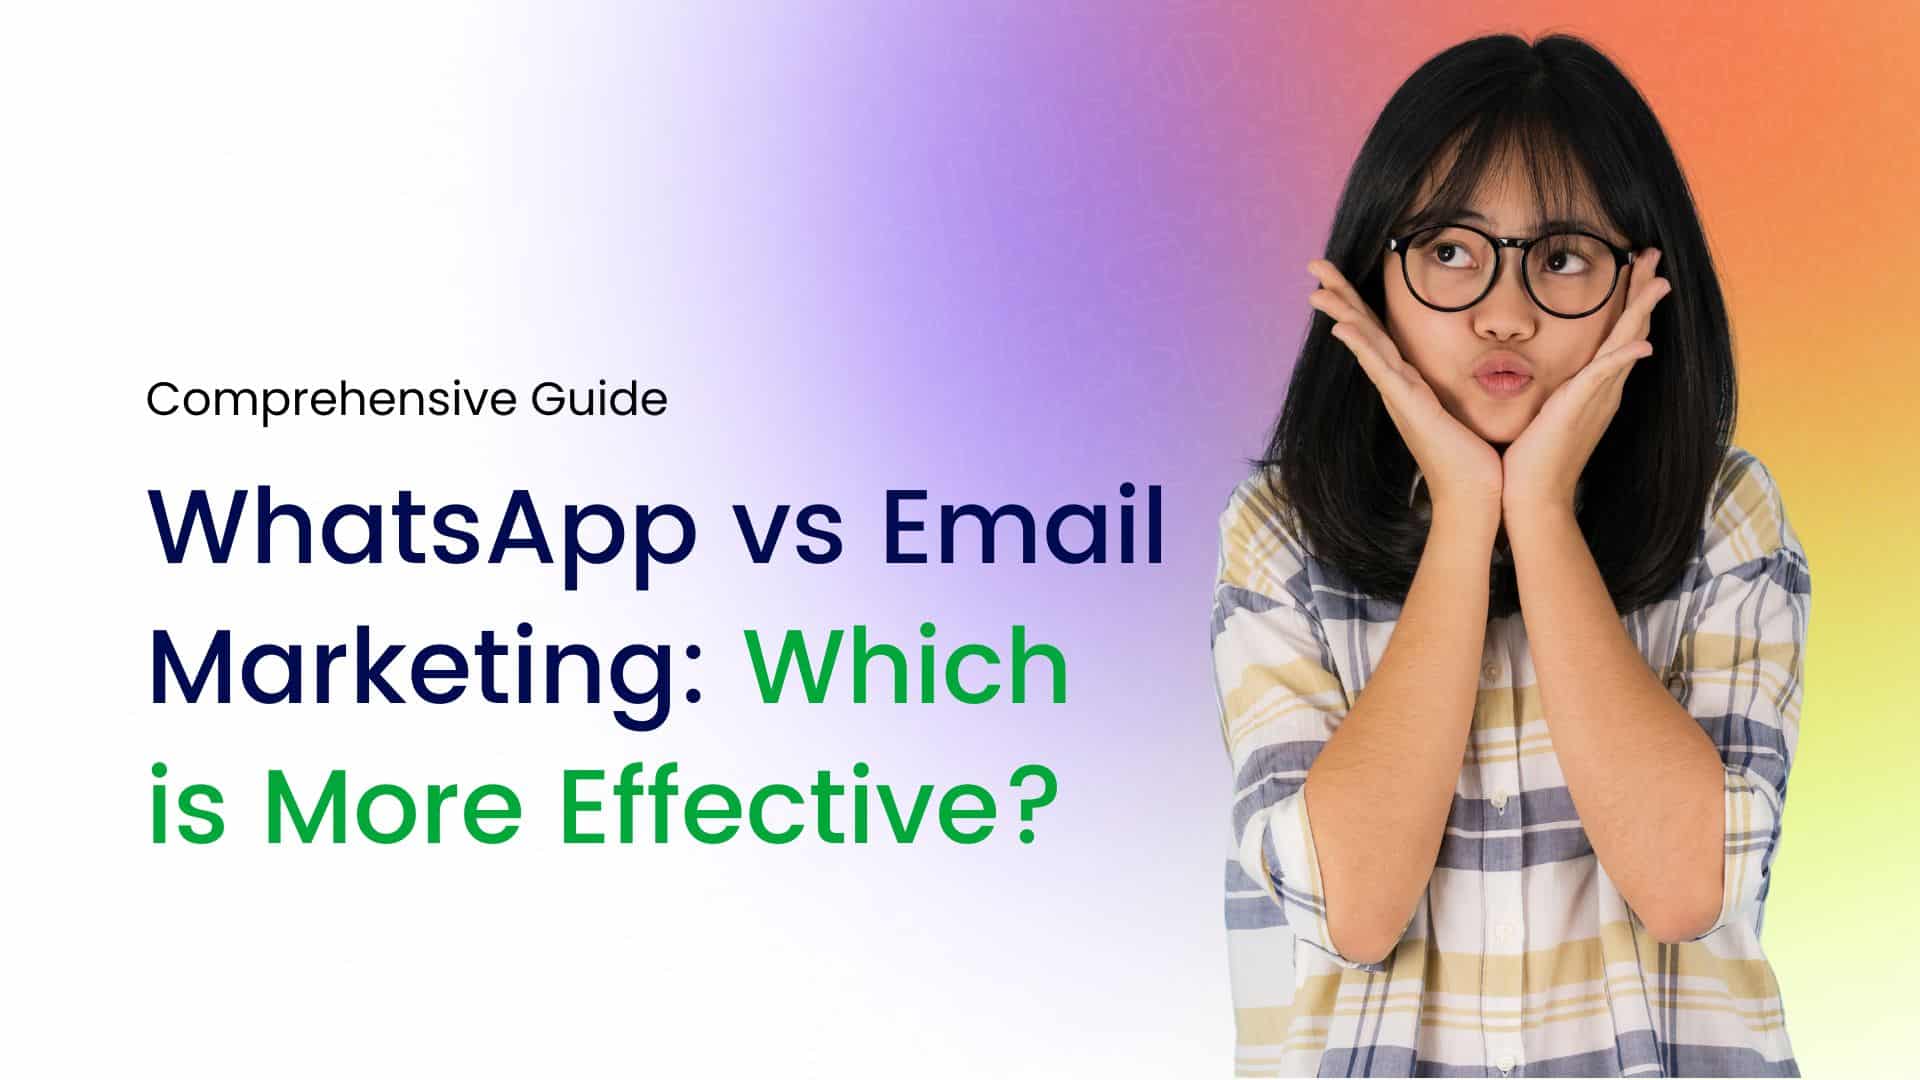 WhatsApp vs Email Marketing